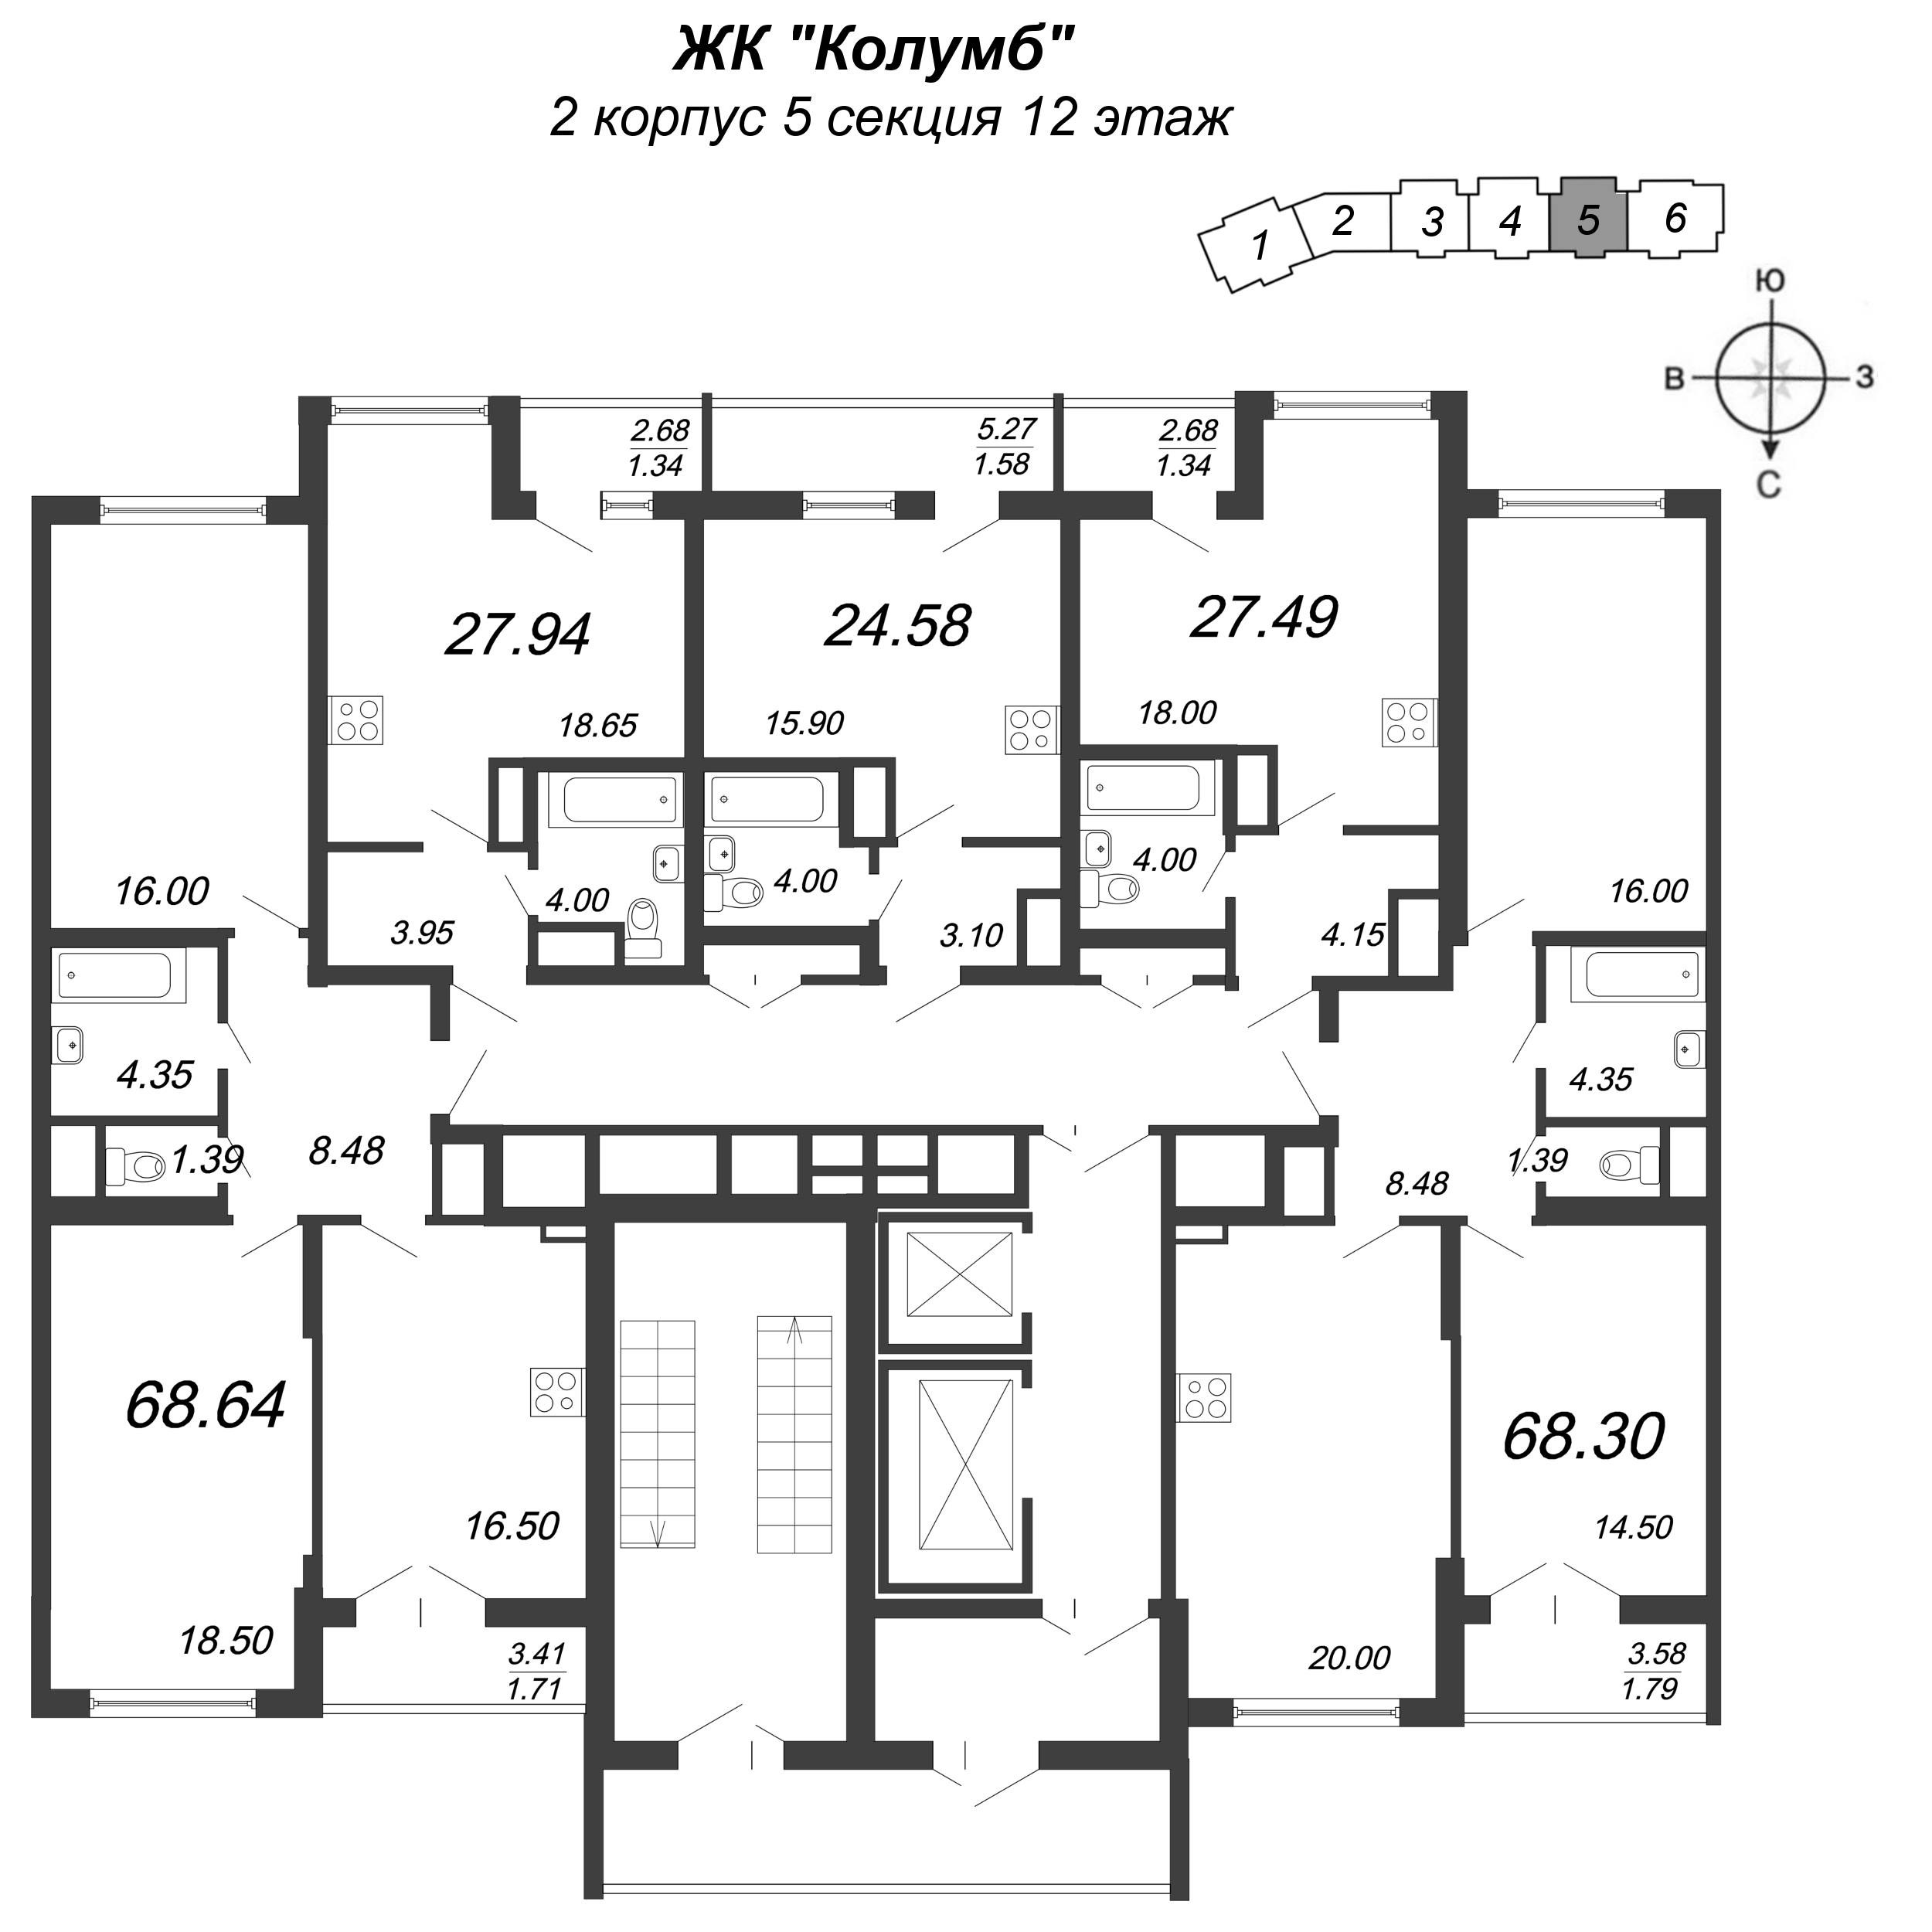 Квартира-студия, 27.3 м² в ЖК "Колумб" - планировка этажа